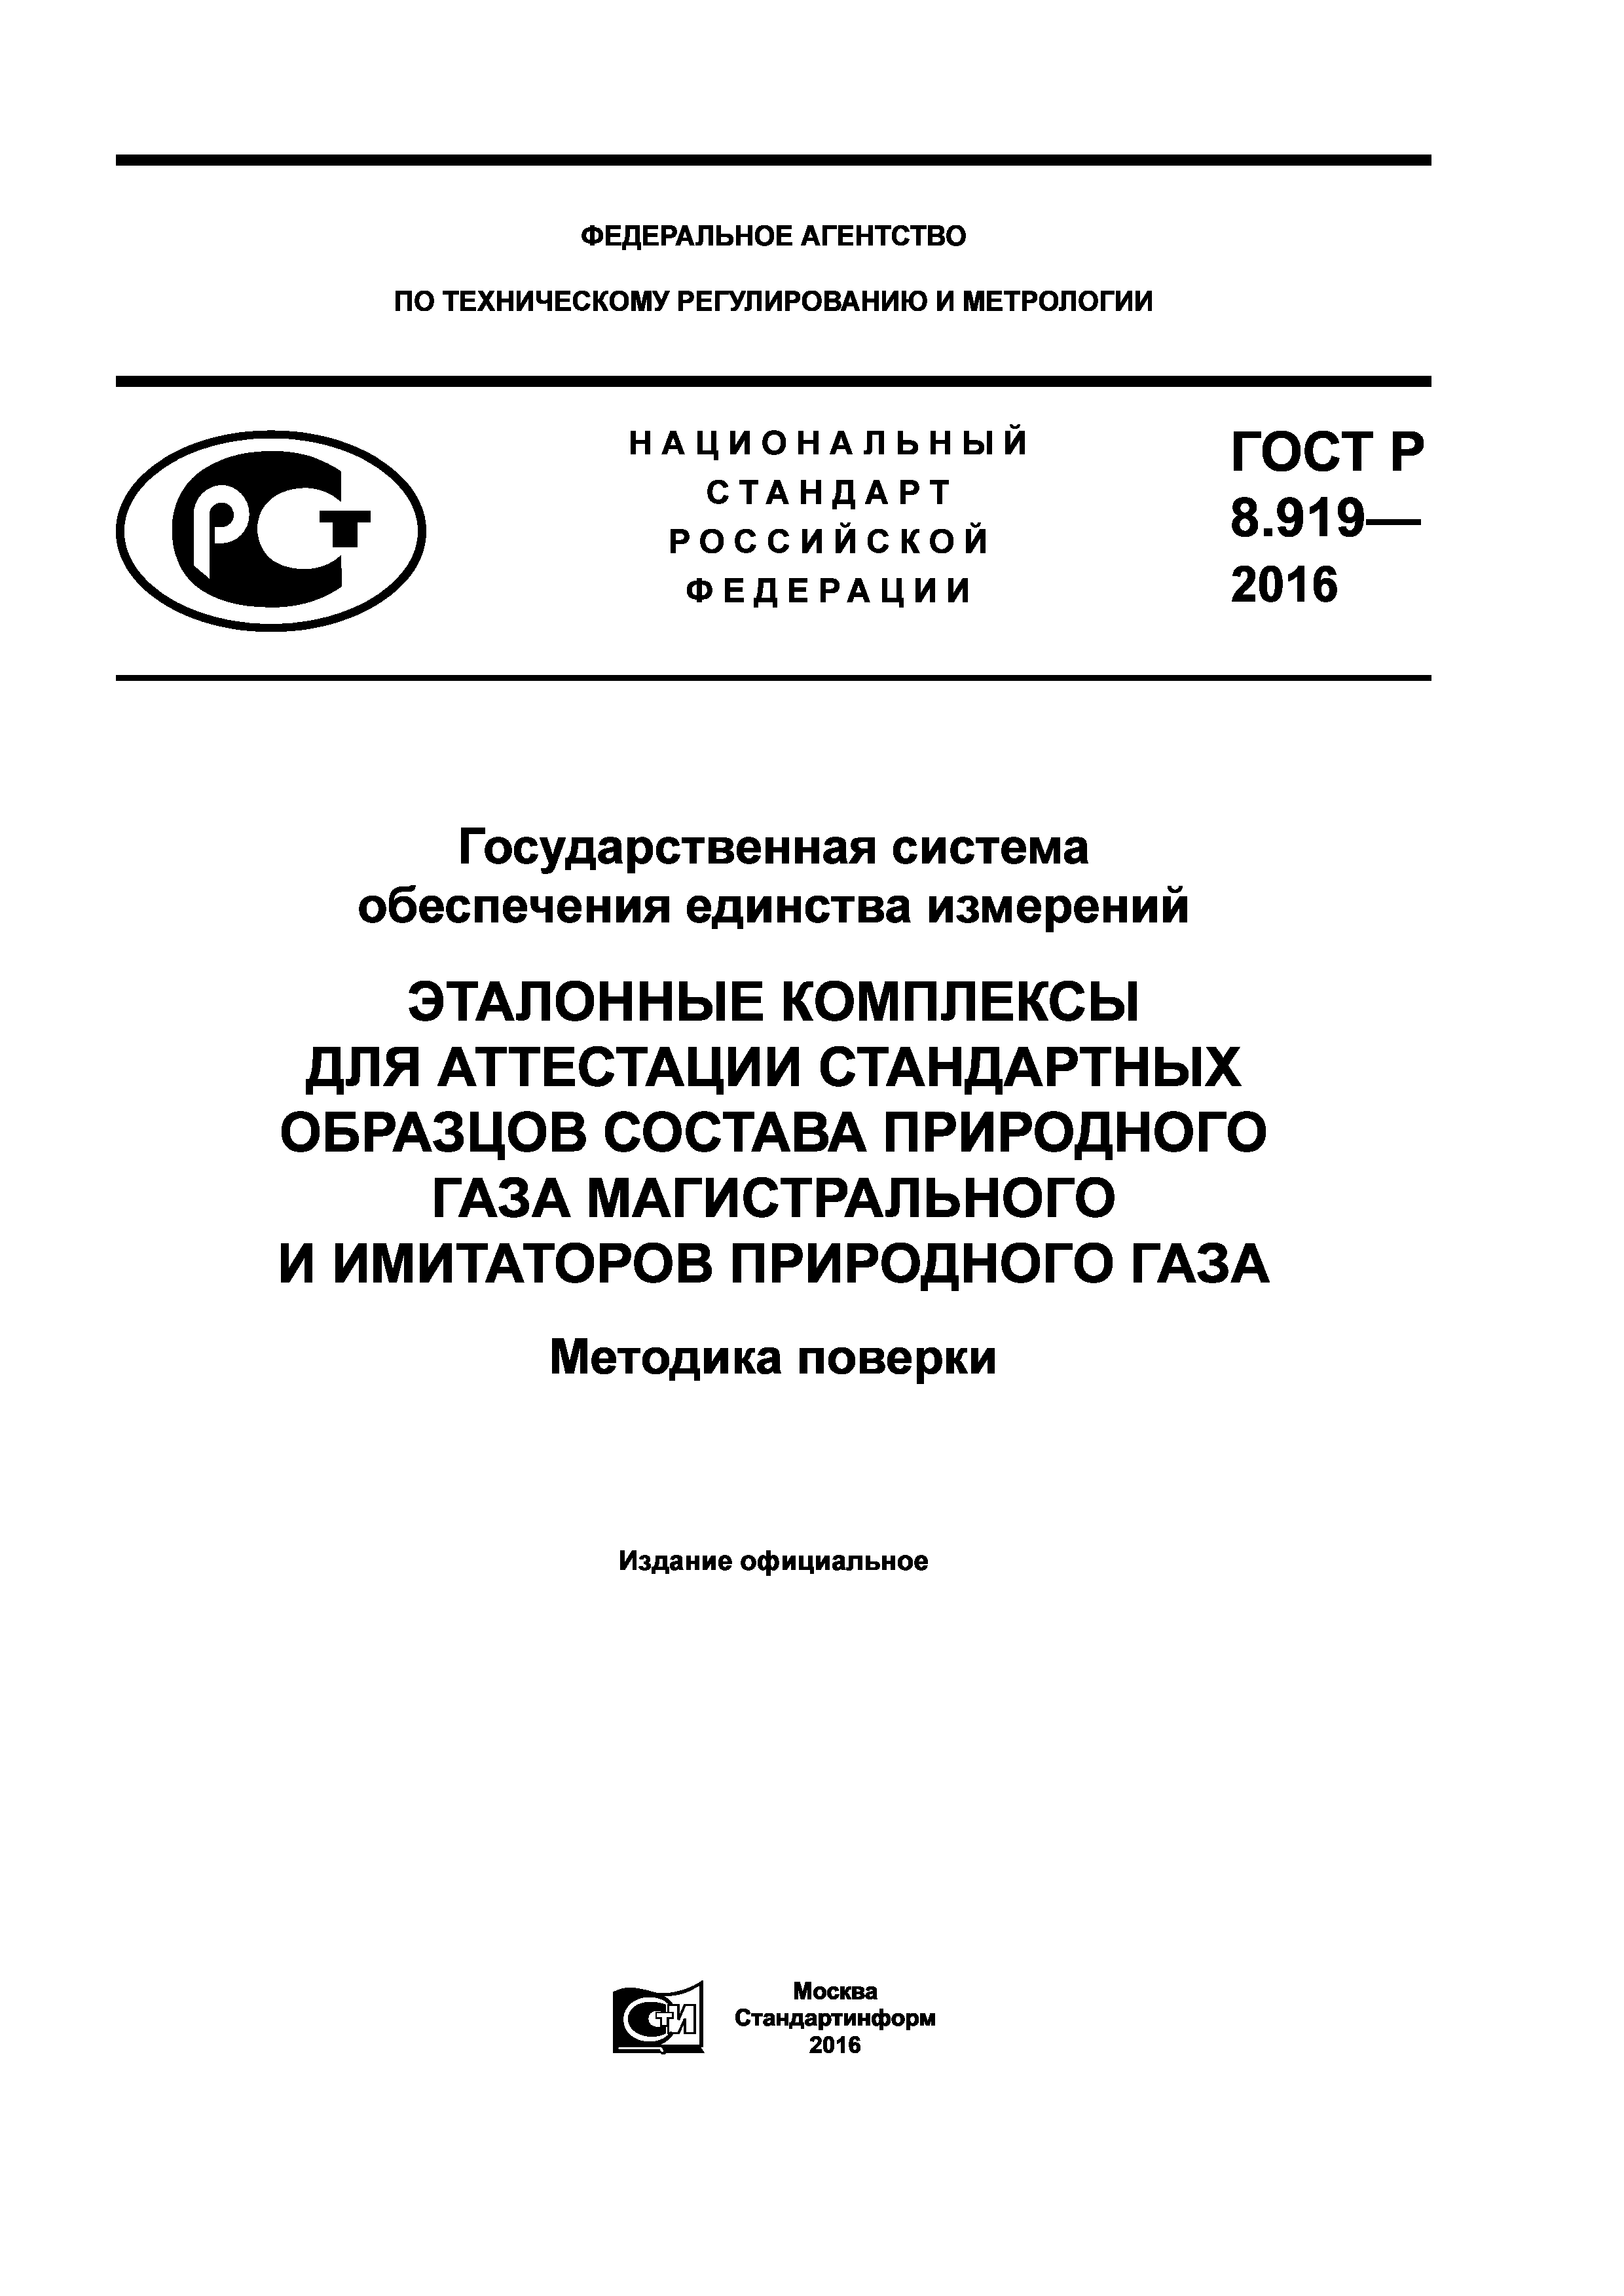 ГОСТ Р 8.919-2016